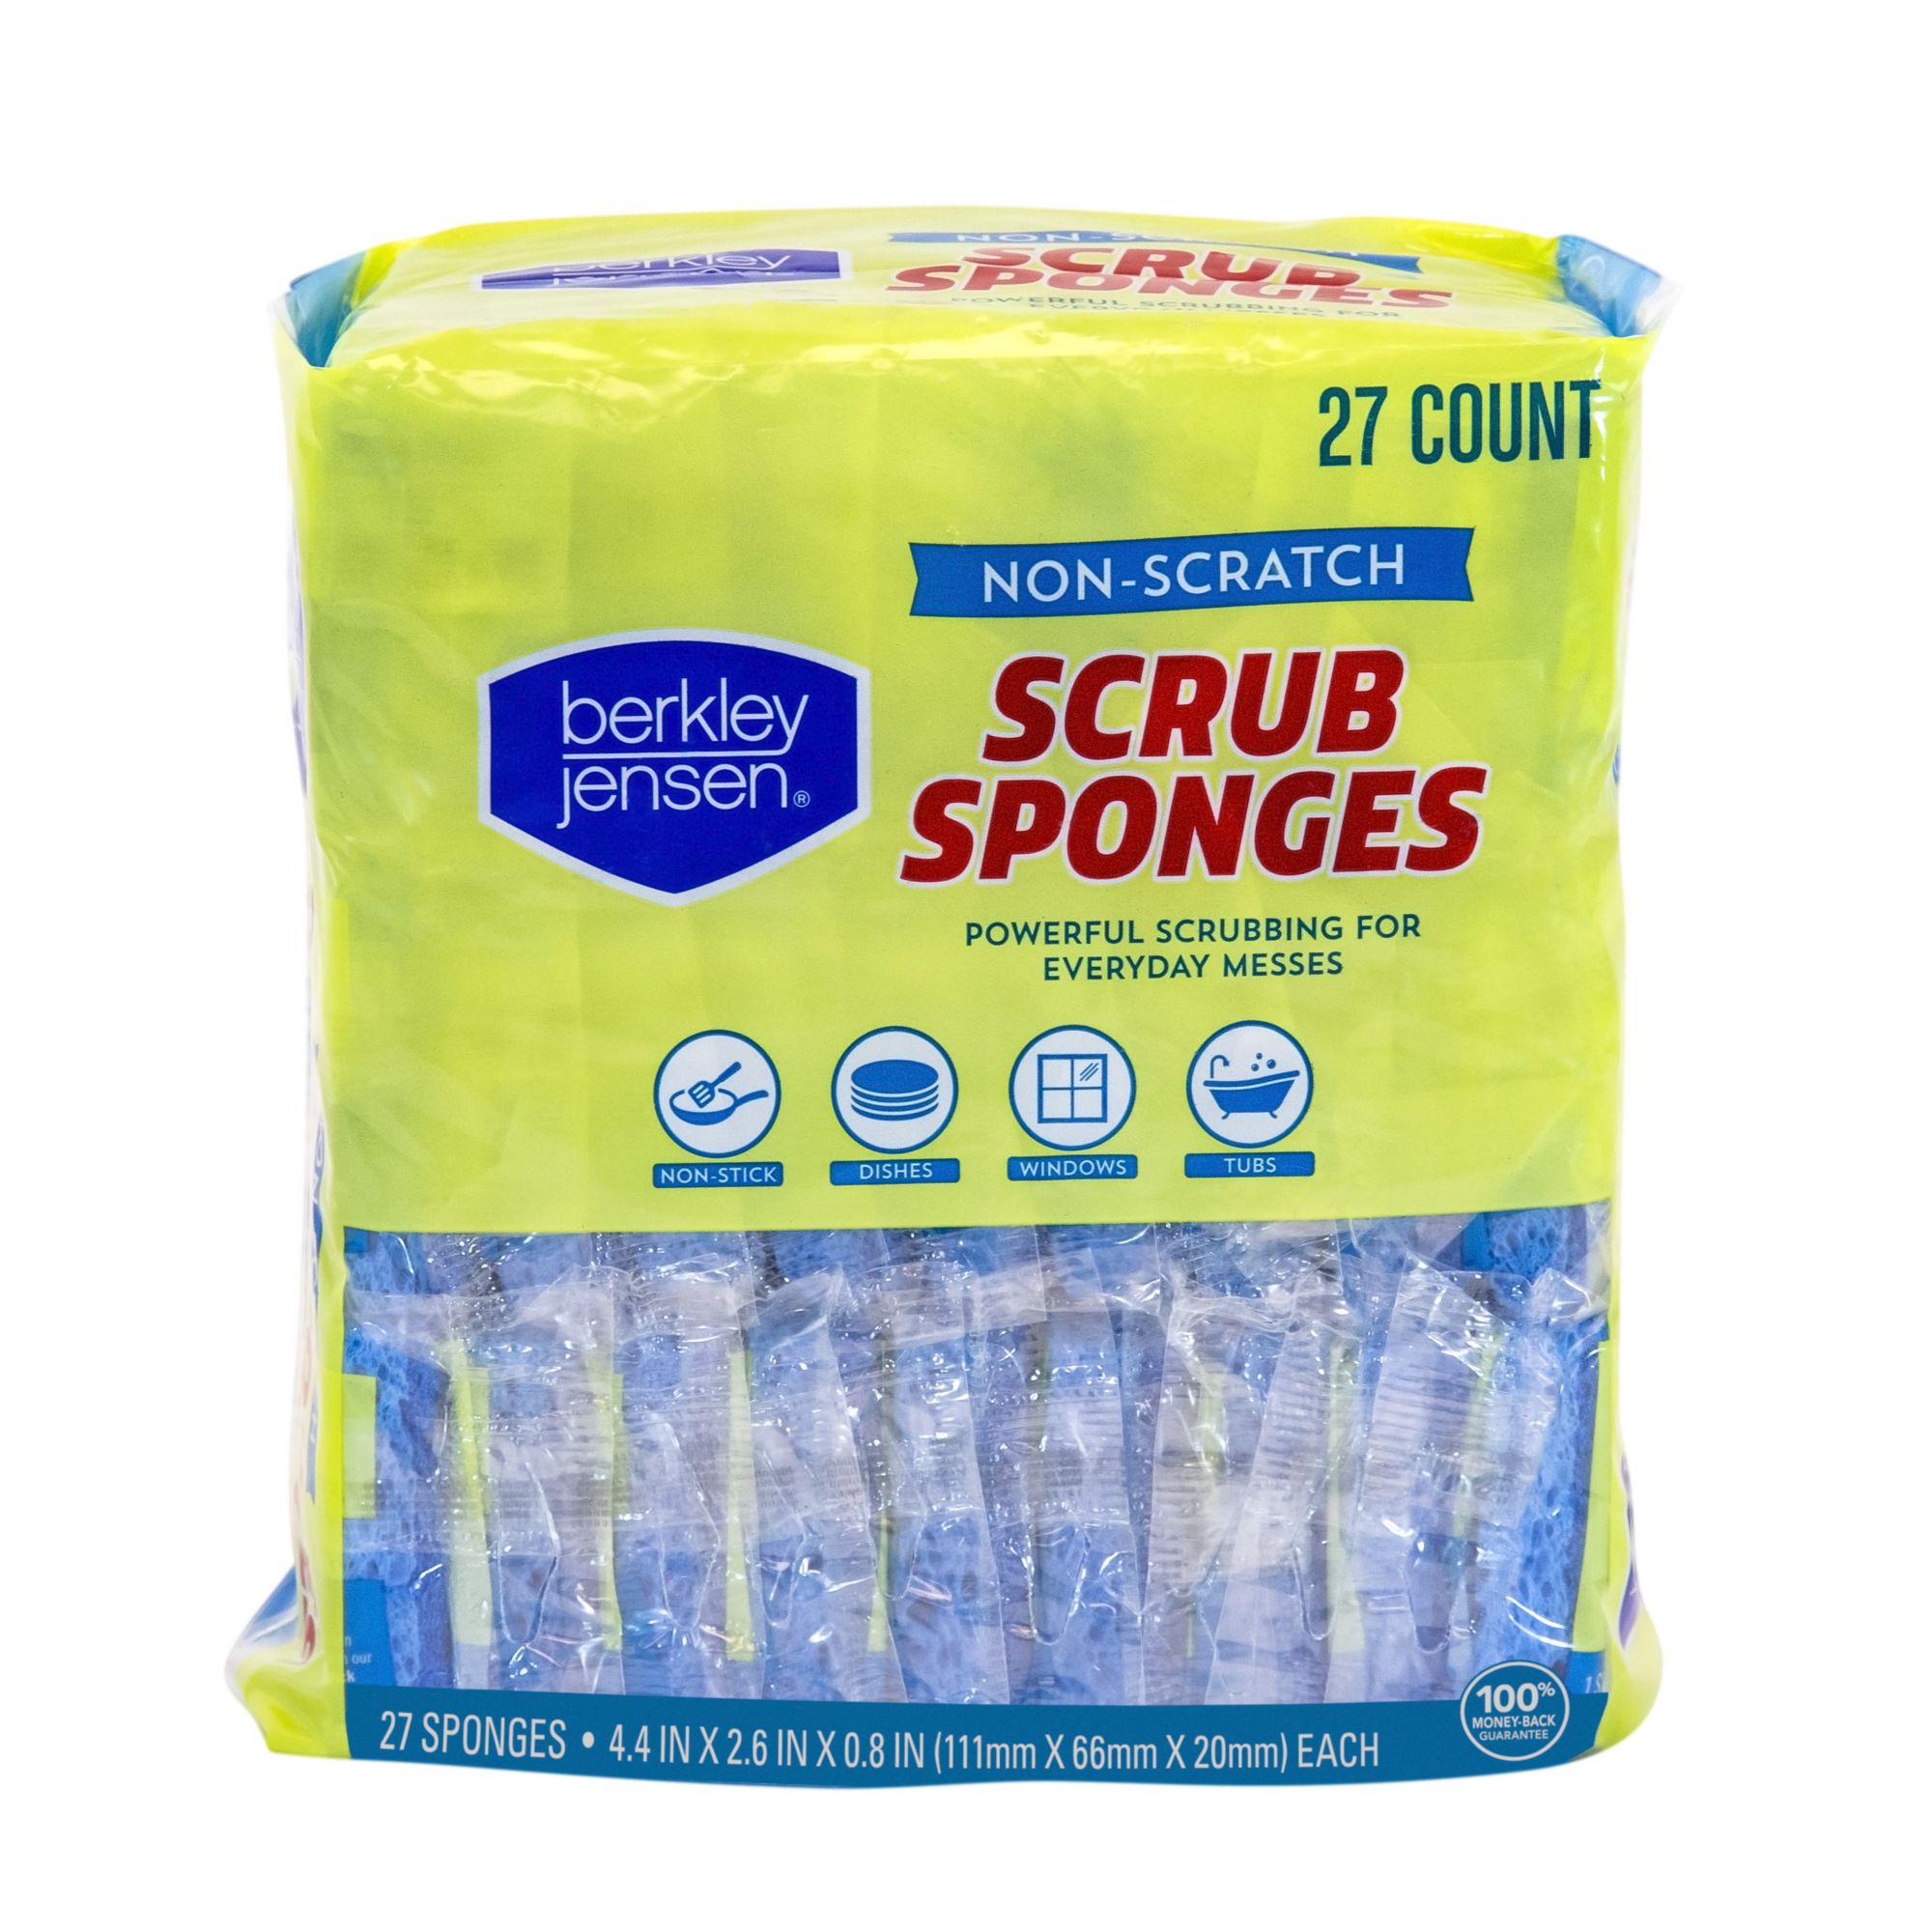 Scrub Buddies Heavy Duty Scouring Pads - 5 ct